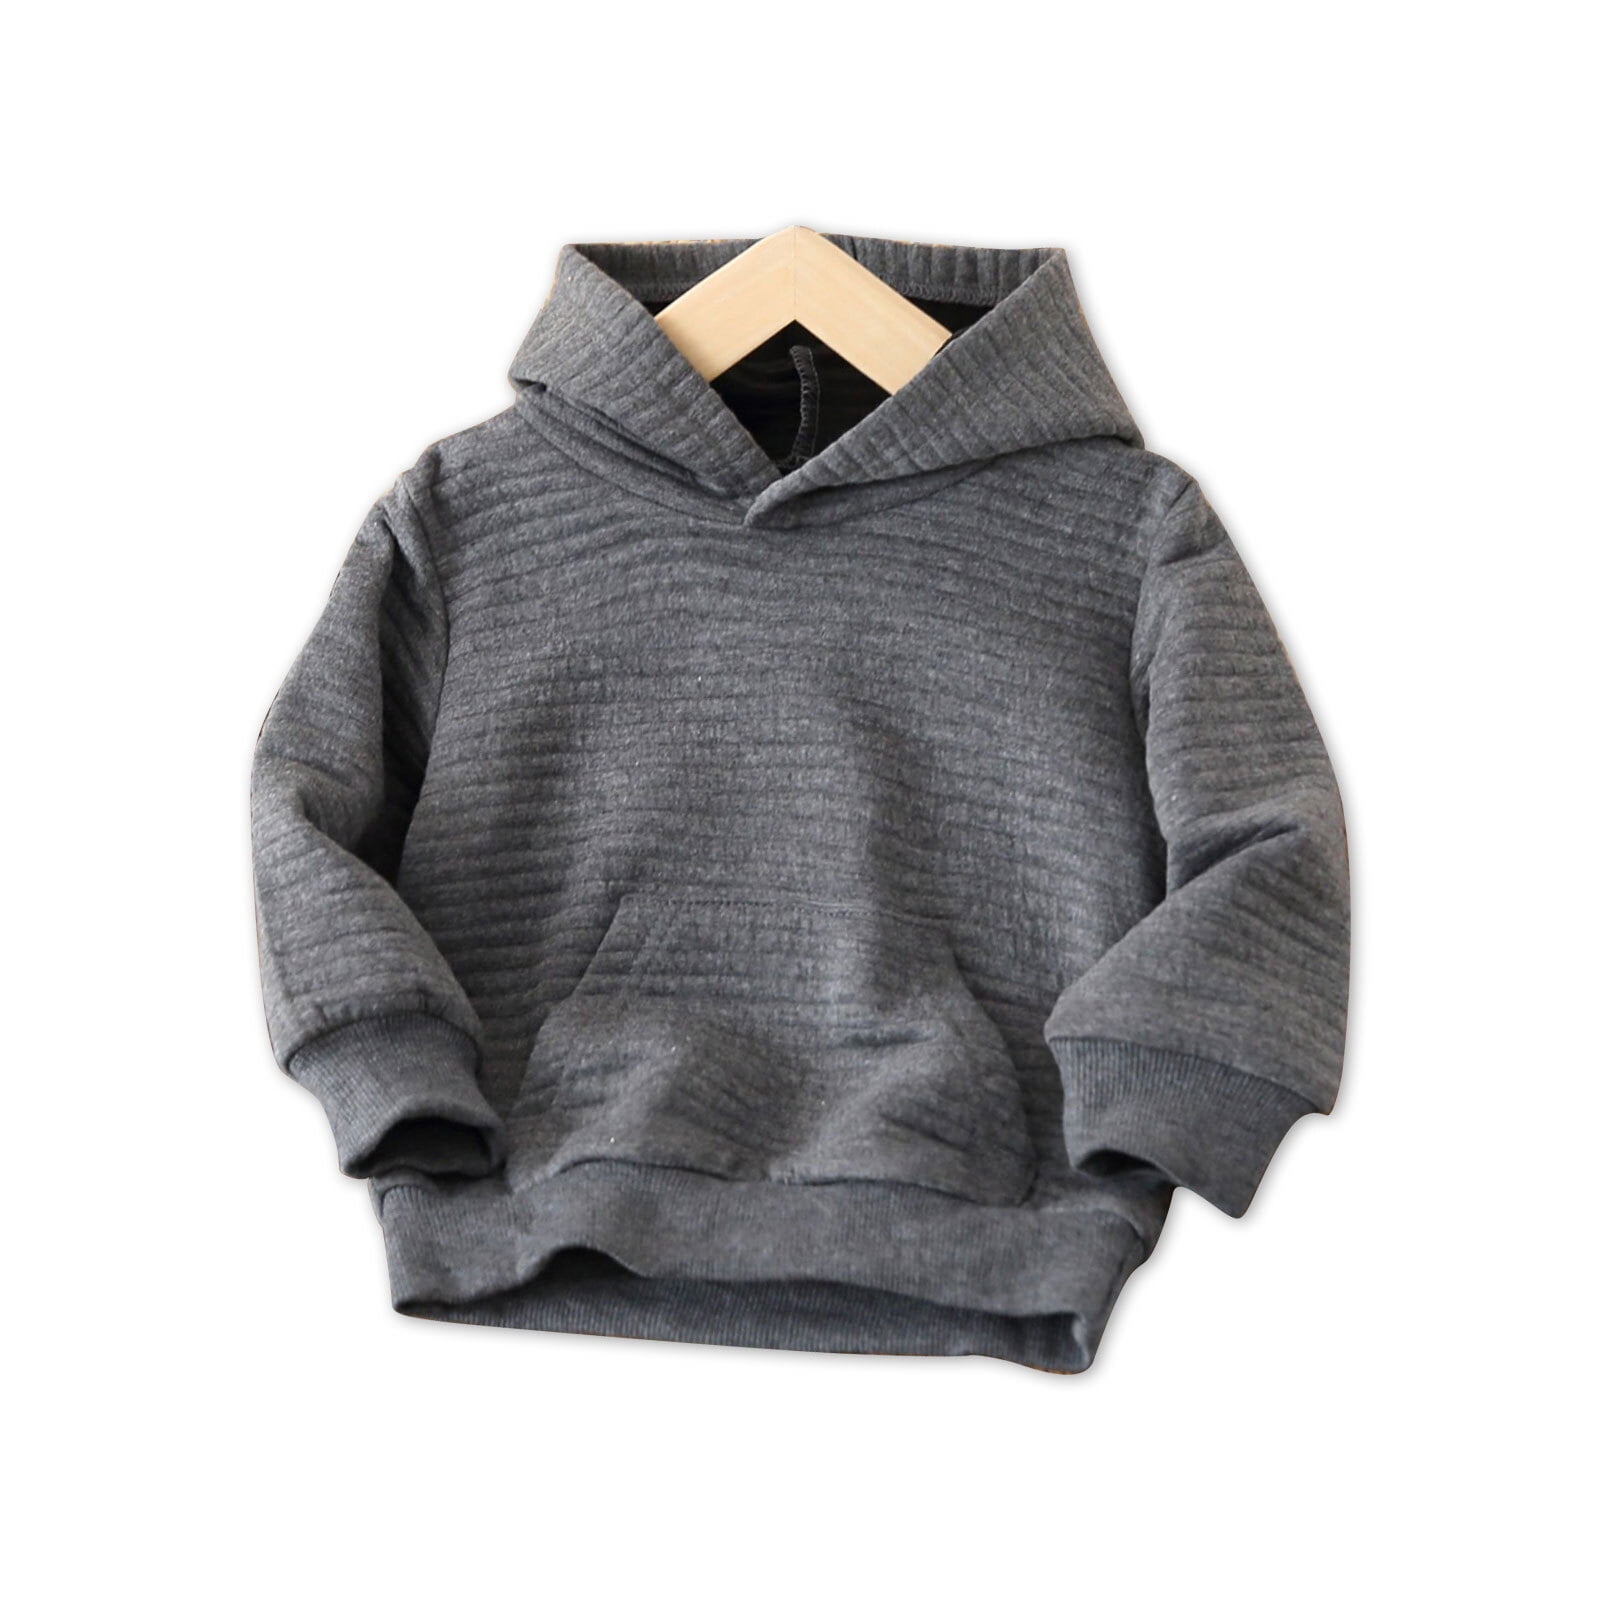 PatPat Toddler Boy/Girl Sweatshirts Solid Color Textured Hoodies ...